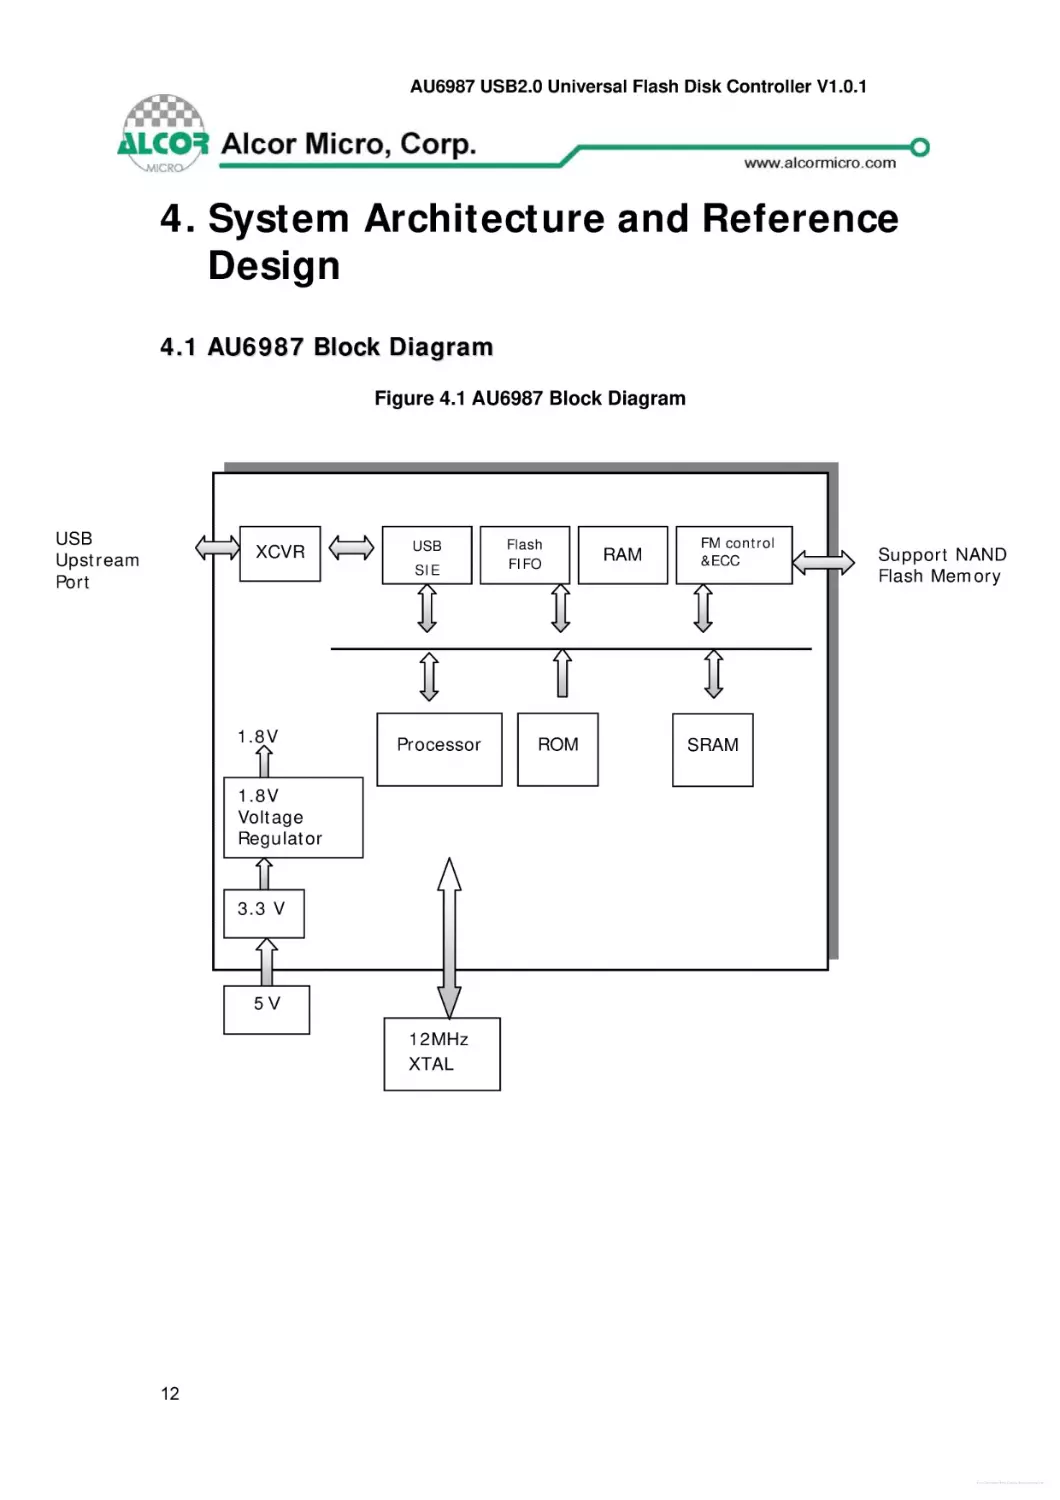 4. System Architecture and Reference Design
4.1 AU6987 Block Diagram
Figure 4.1 AU6987 Block Diagram